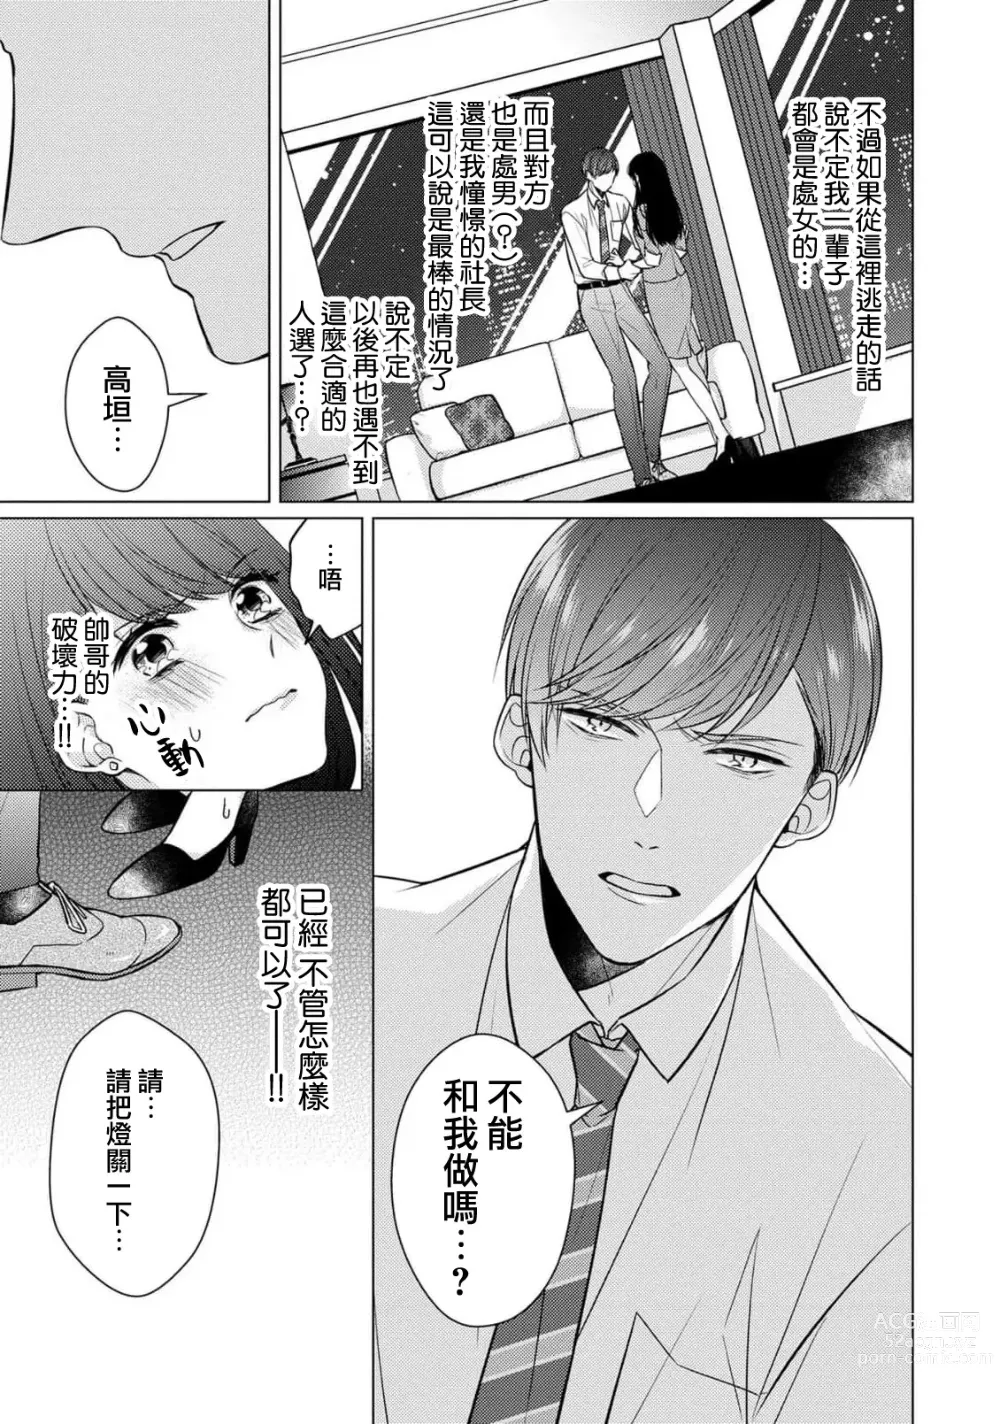 Page 22 of manga 宠爱王子和处女少女~30岁还是处女，这一次和真壁社长签订了炮友契约~ 1-5 end